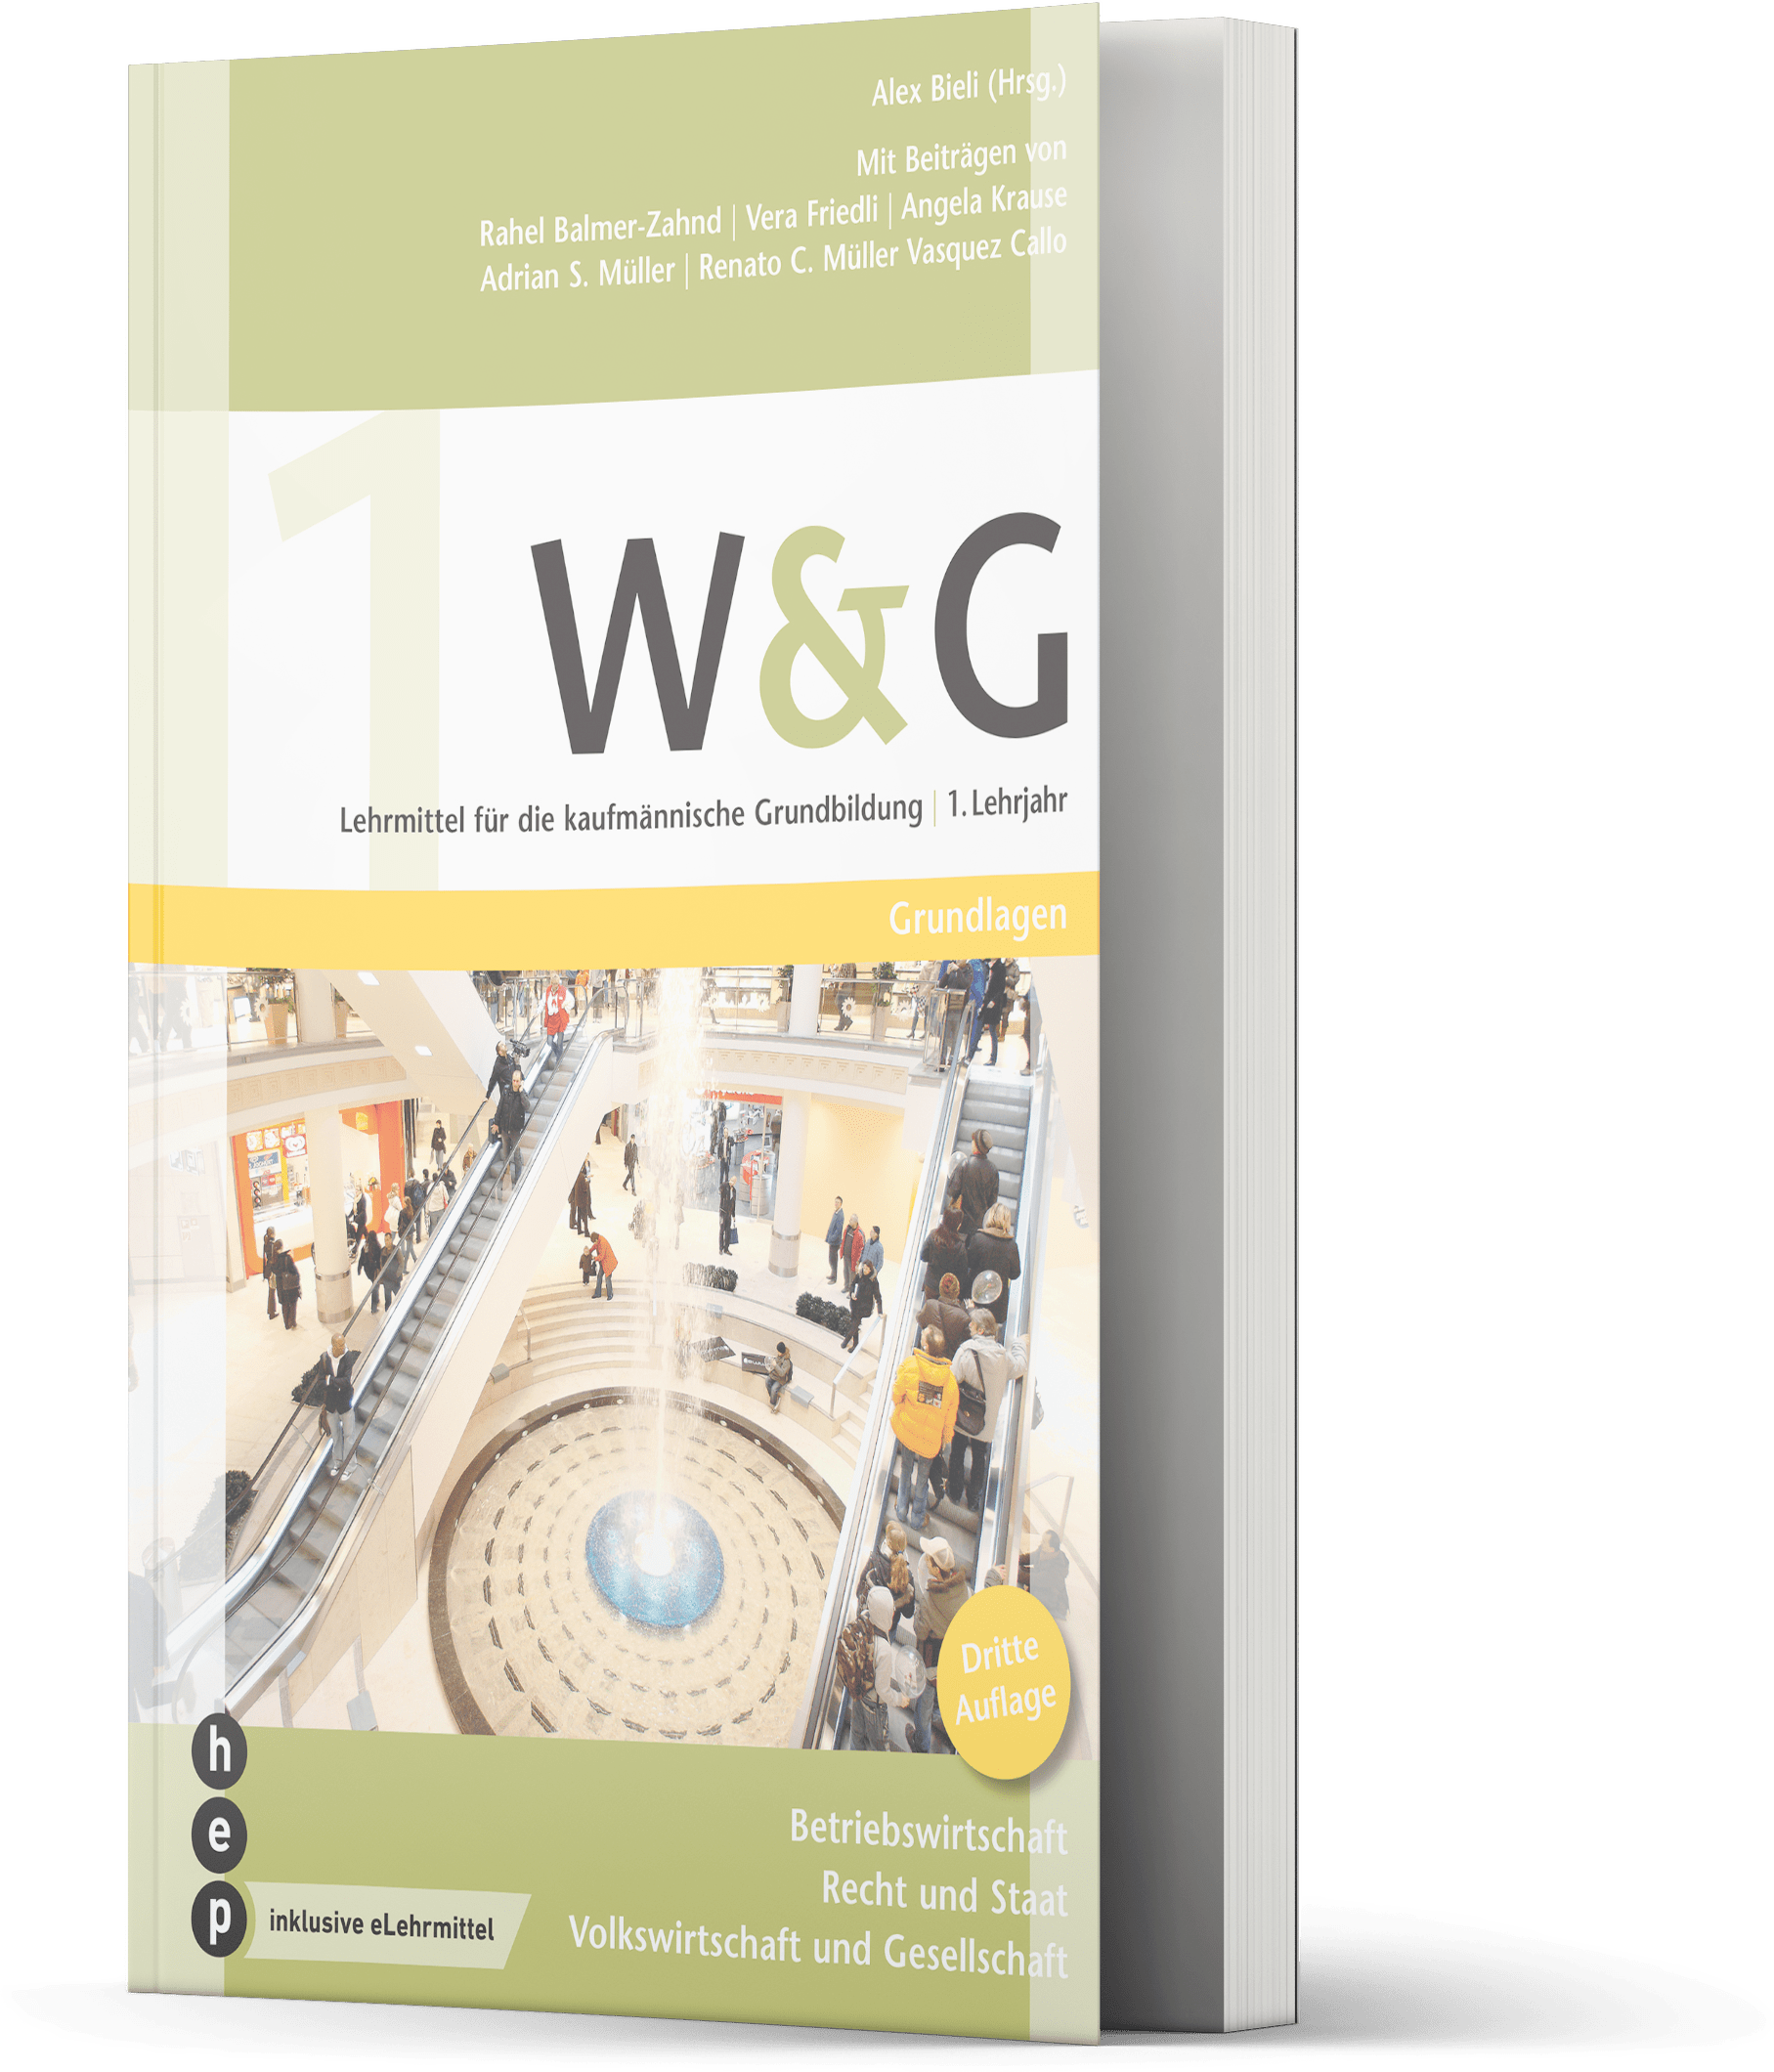 A&E 04/2019 by A&W Verlag AG - Issuu